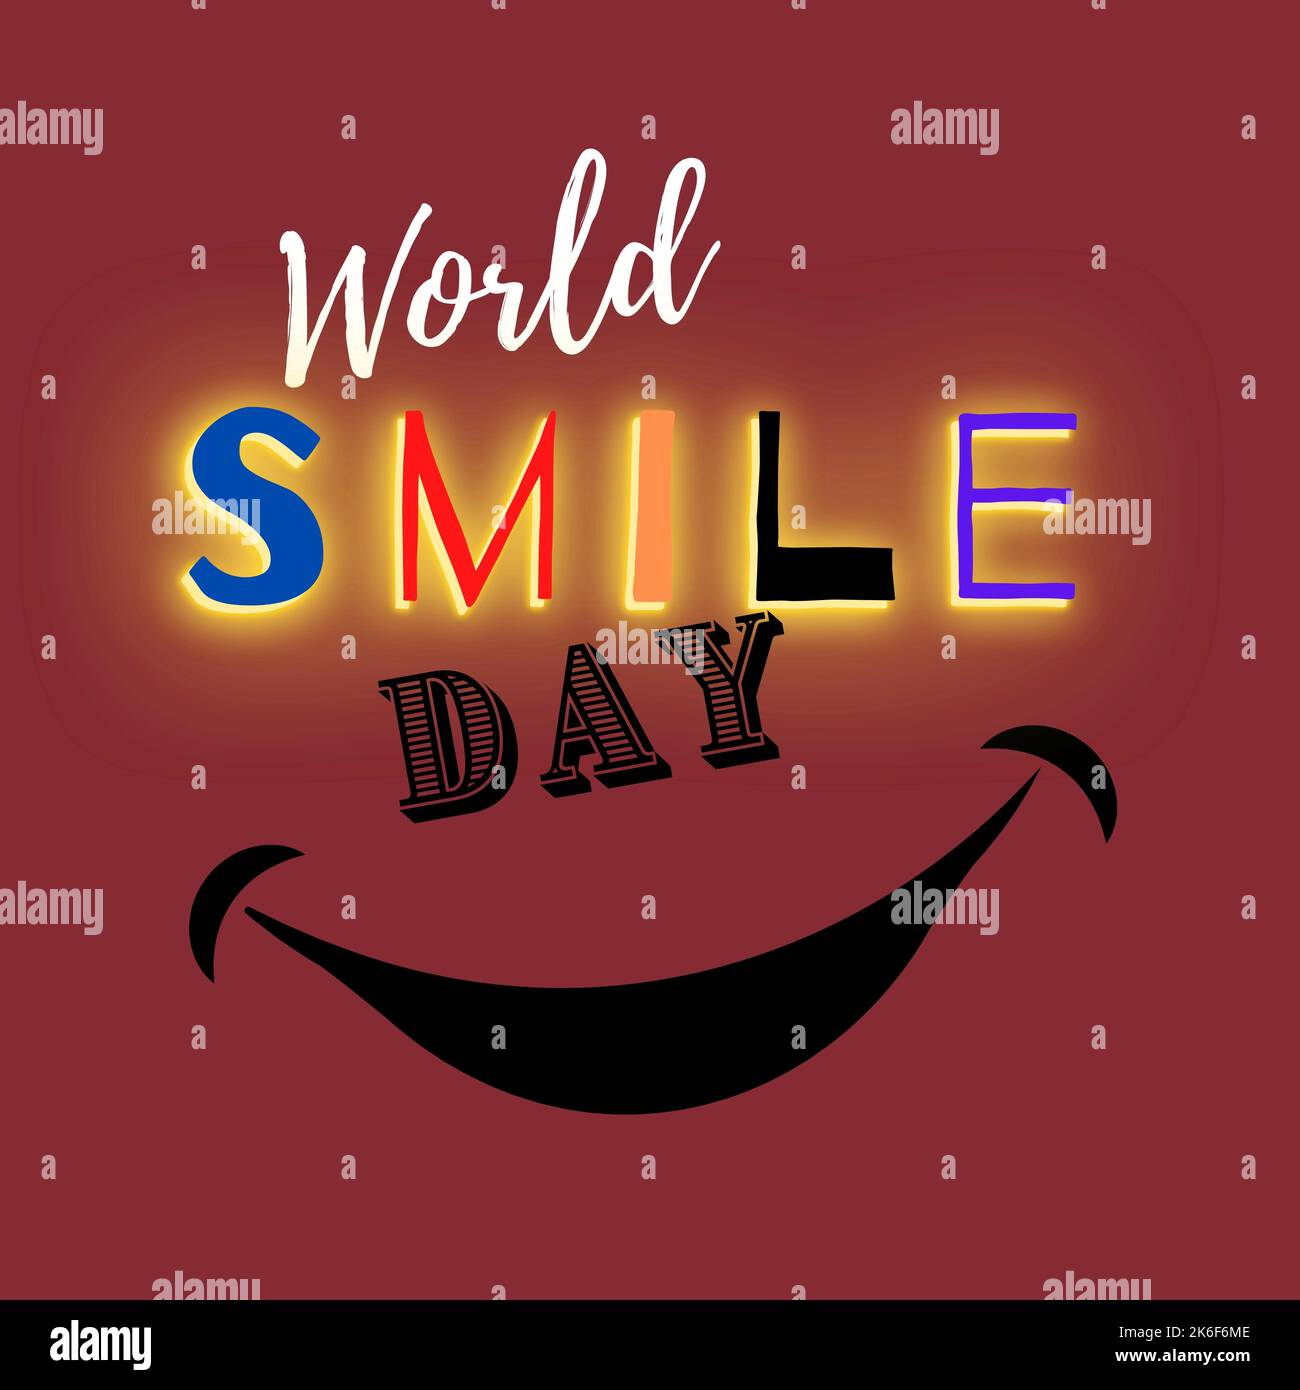 Smile Images | SMILING Wallpaper | Smile Wallpaper | Smile Wallpaper Foto Stock